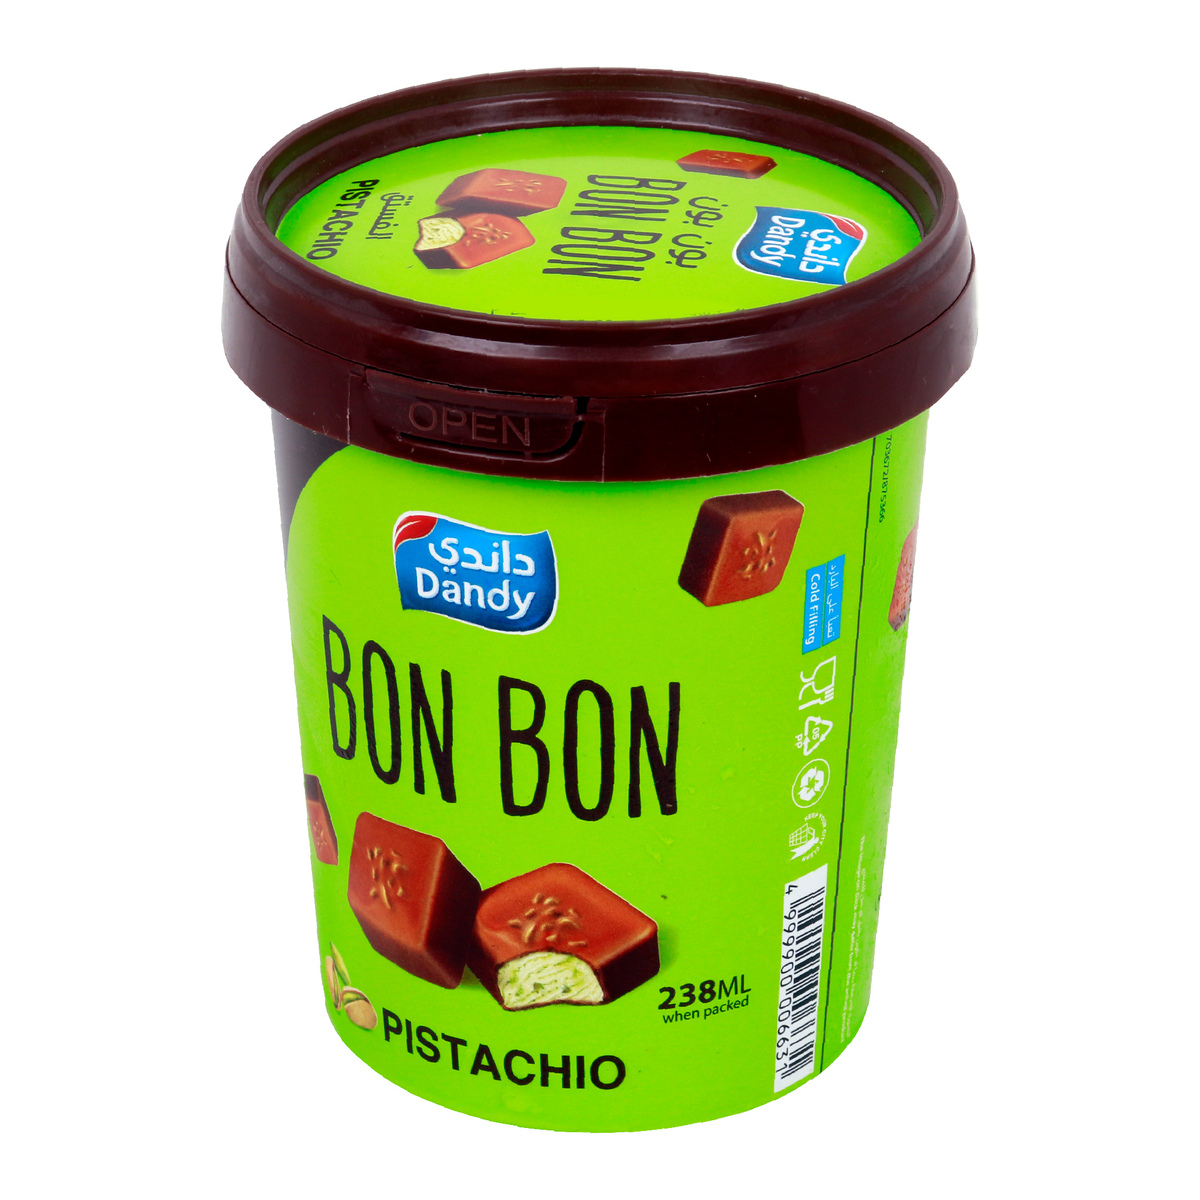 Dandy Ice Cream Bon Bon Pistachio 238ml